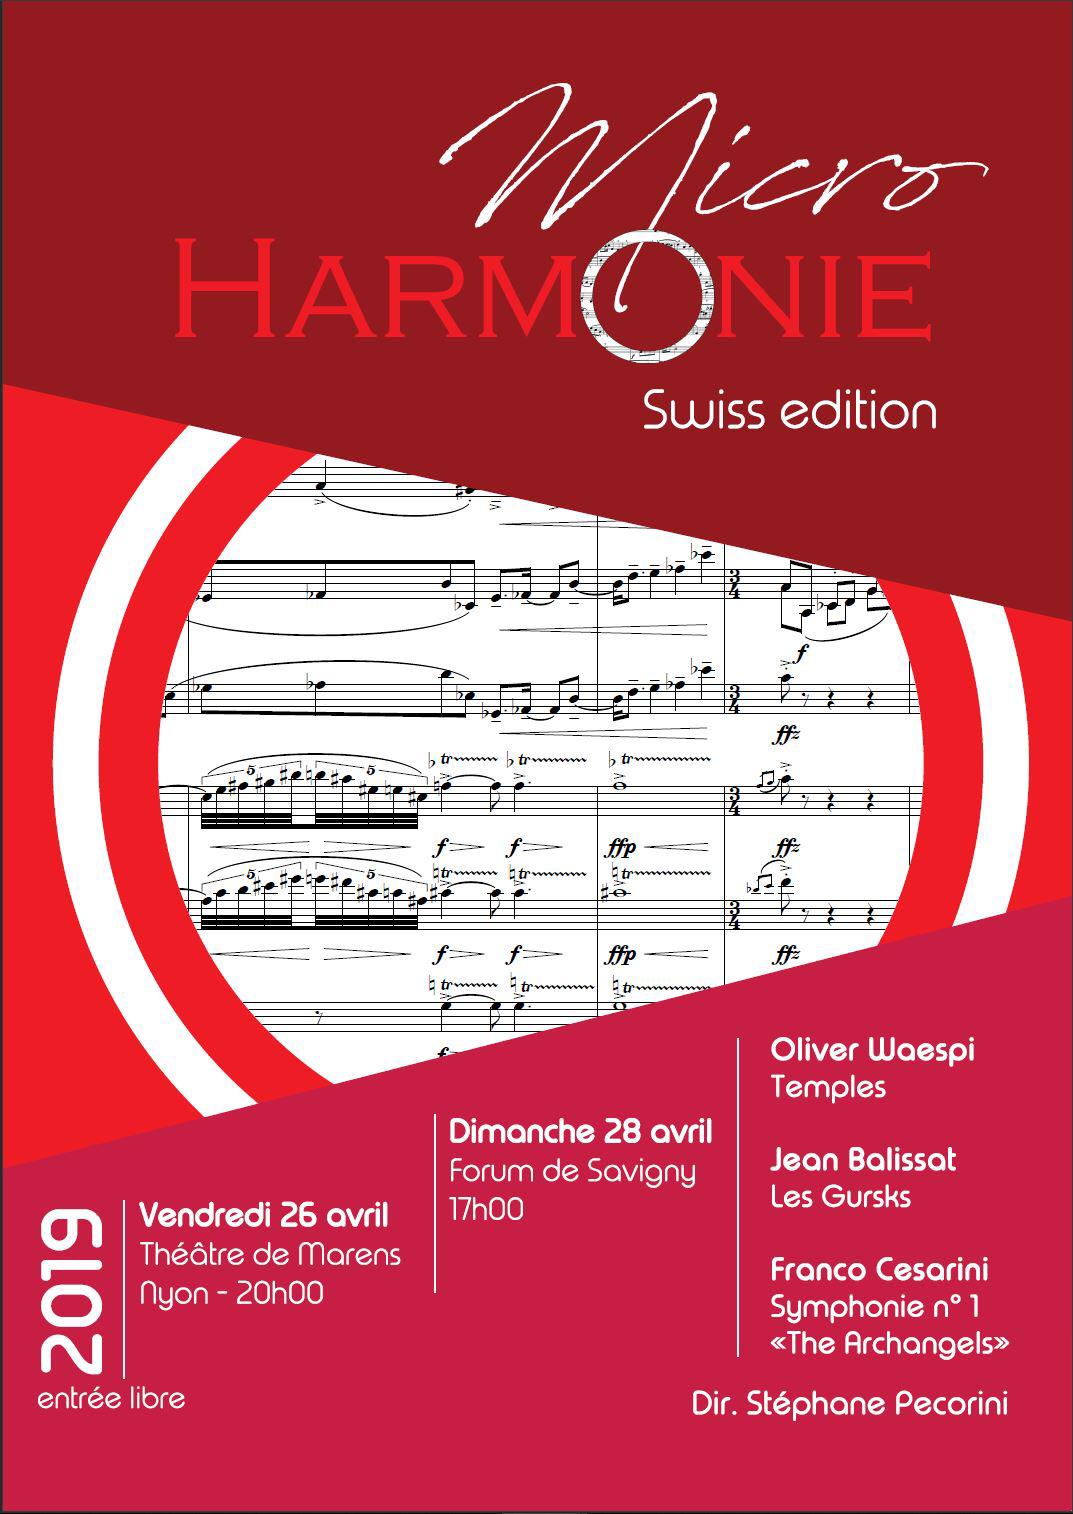 Micro Harmonie Swiss Edition - Nyon and Savigny, Switzerland, 26th and 28th April 2019